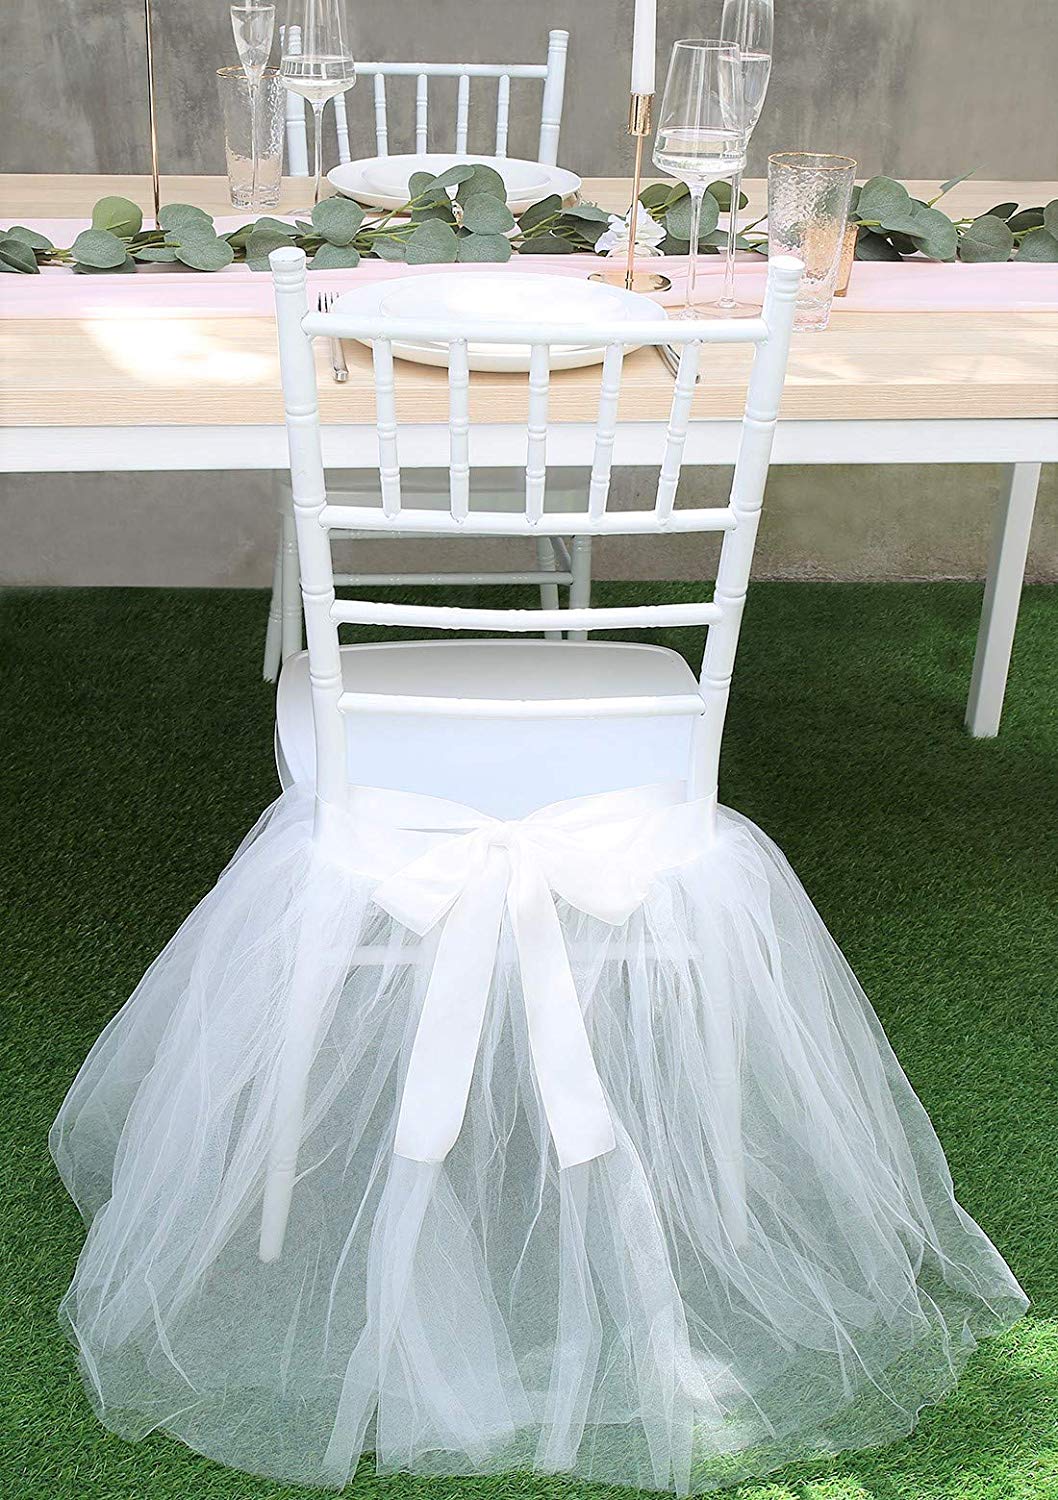 Uniqooo Chair Tulle Tutu Decoration For Bridal Shower Navadeal Com